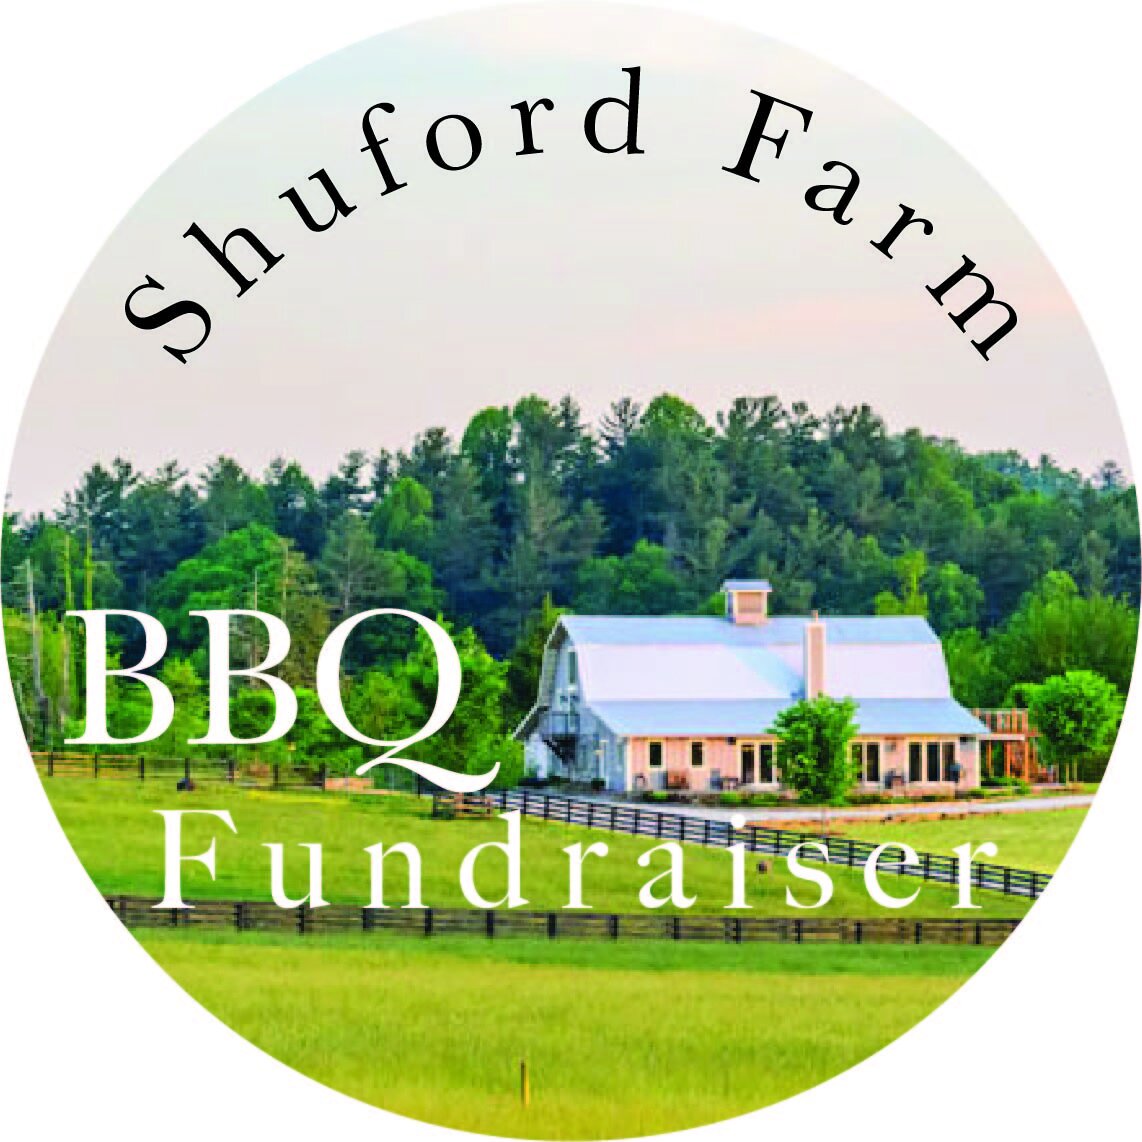 Shuford Farm BBQ Fundraiser Logo.jpg